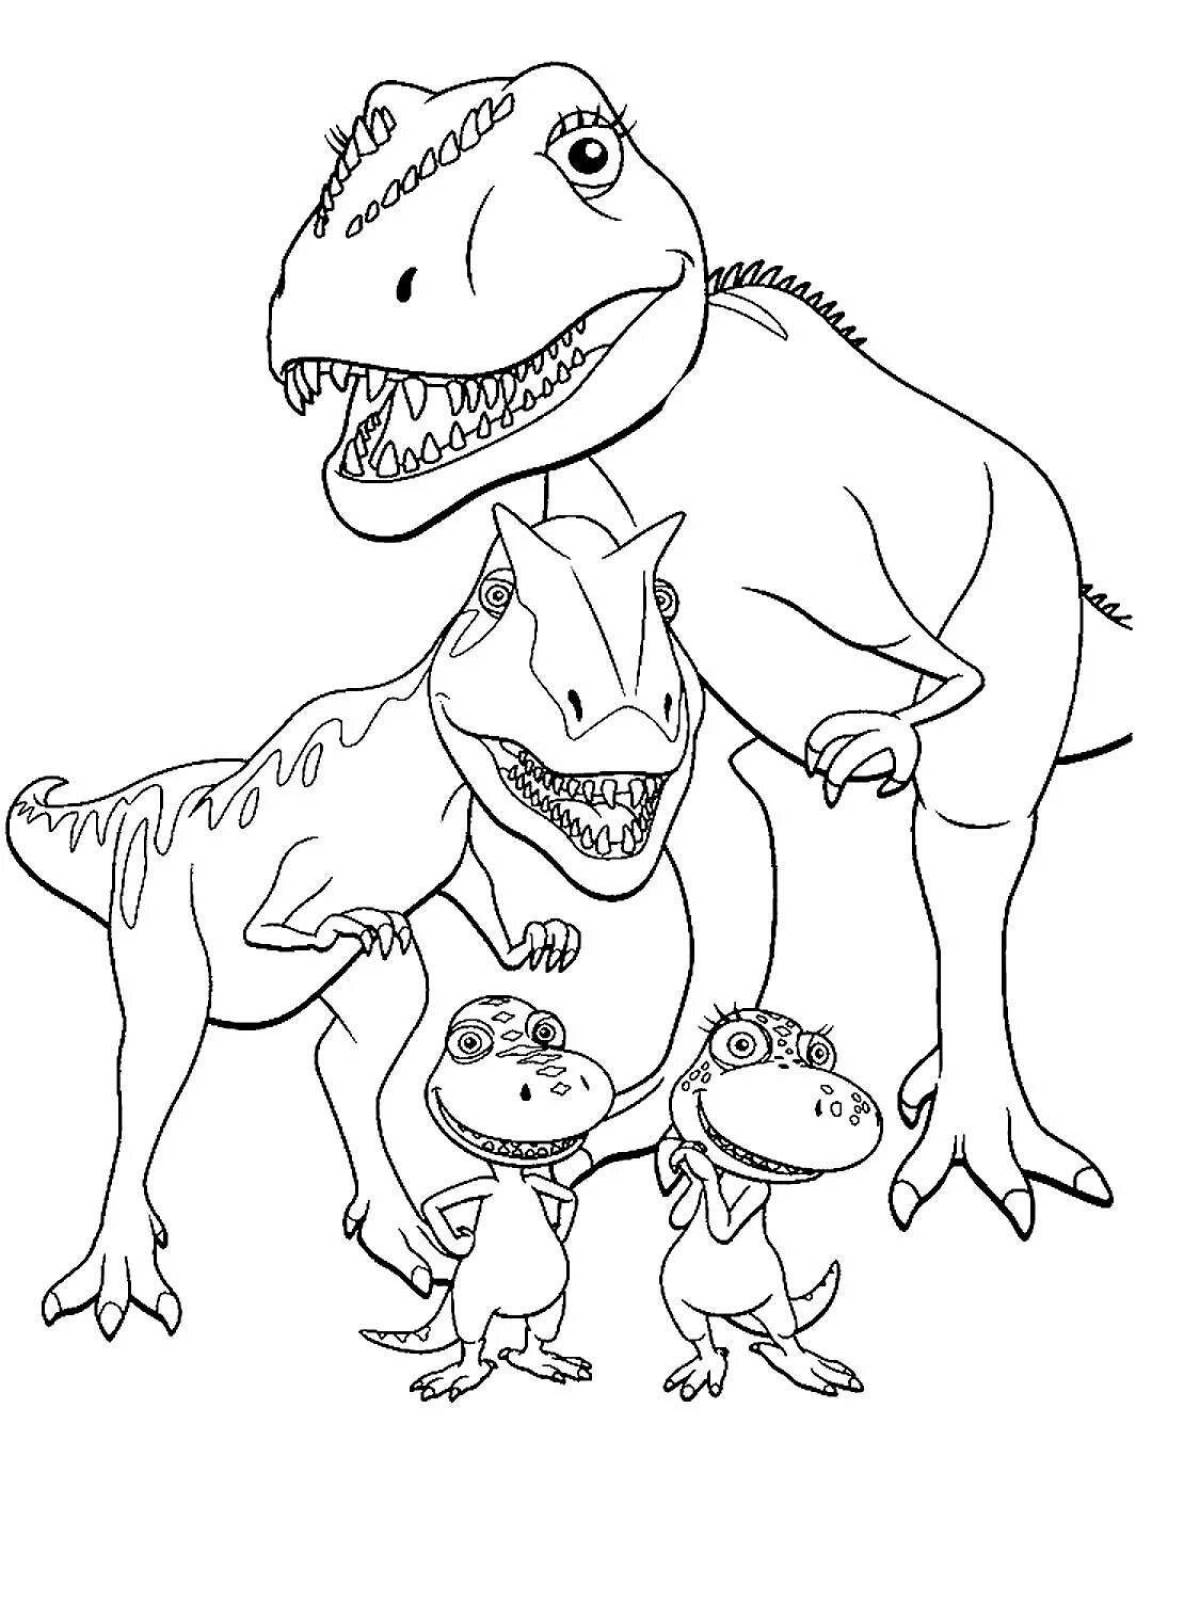 Dino rex wonderful coloring book